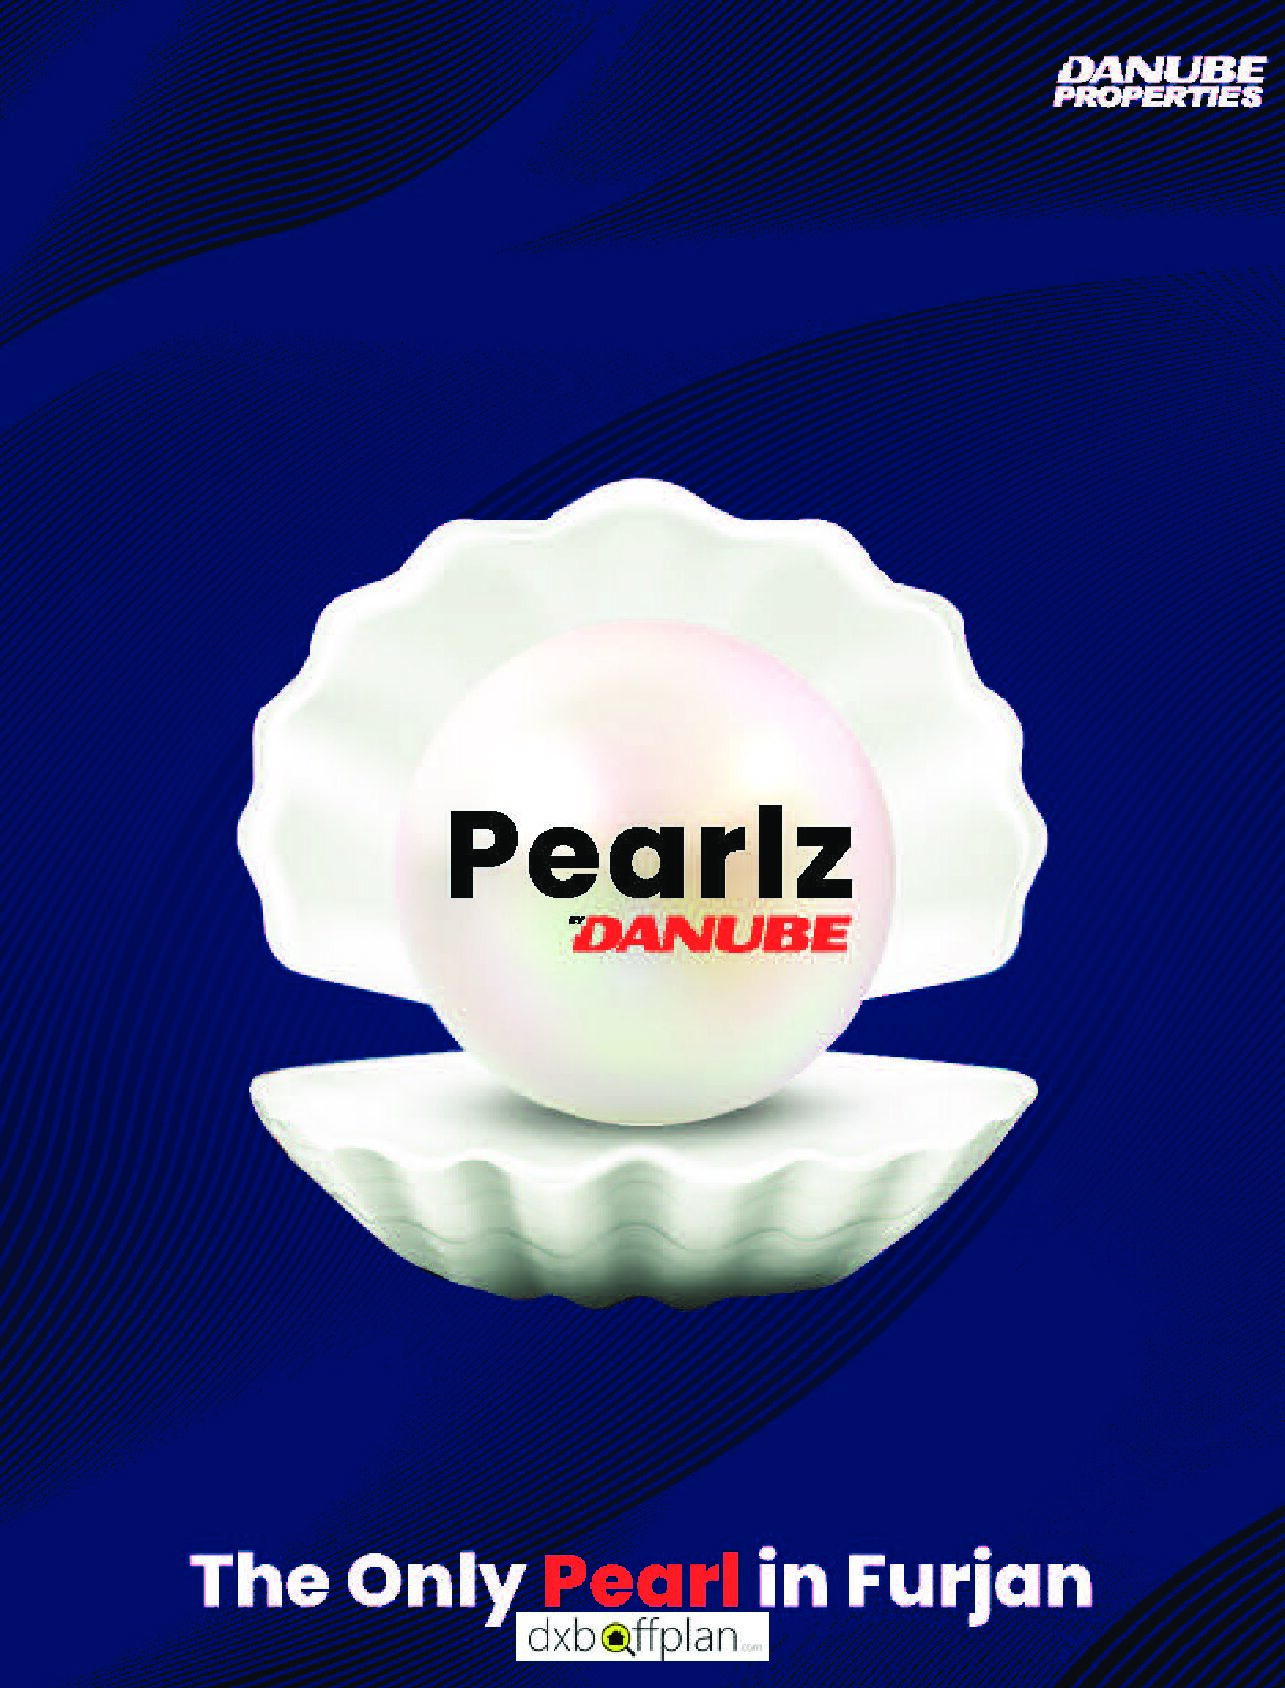 Pearlz-Apartments-by-Danube-Properties-Brochure